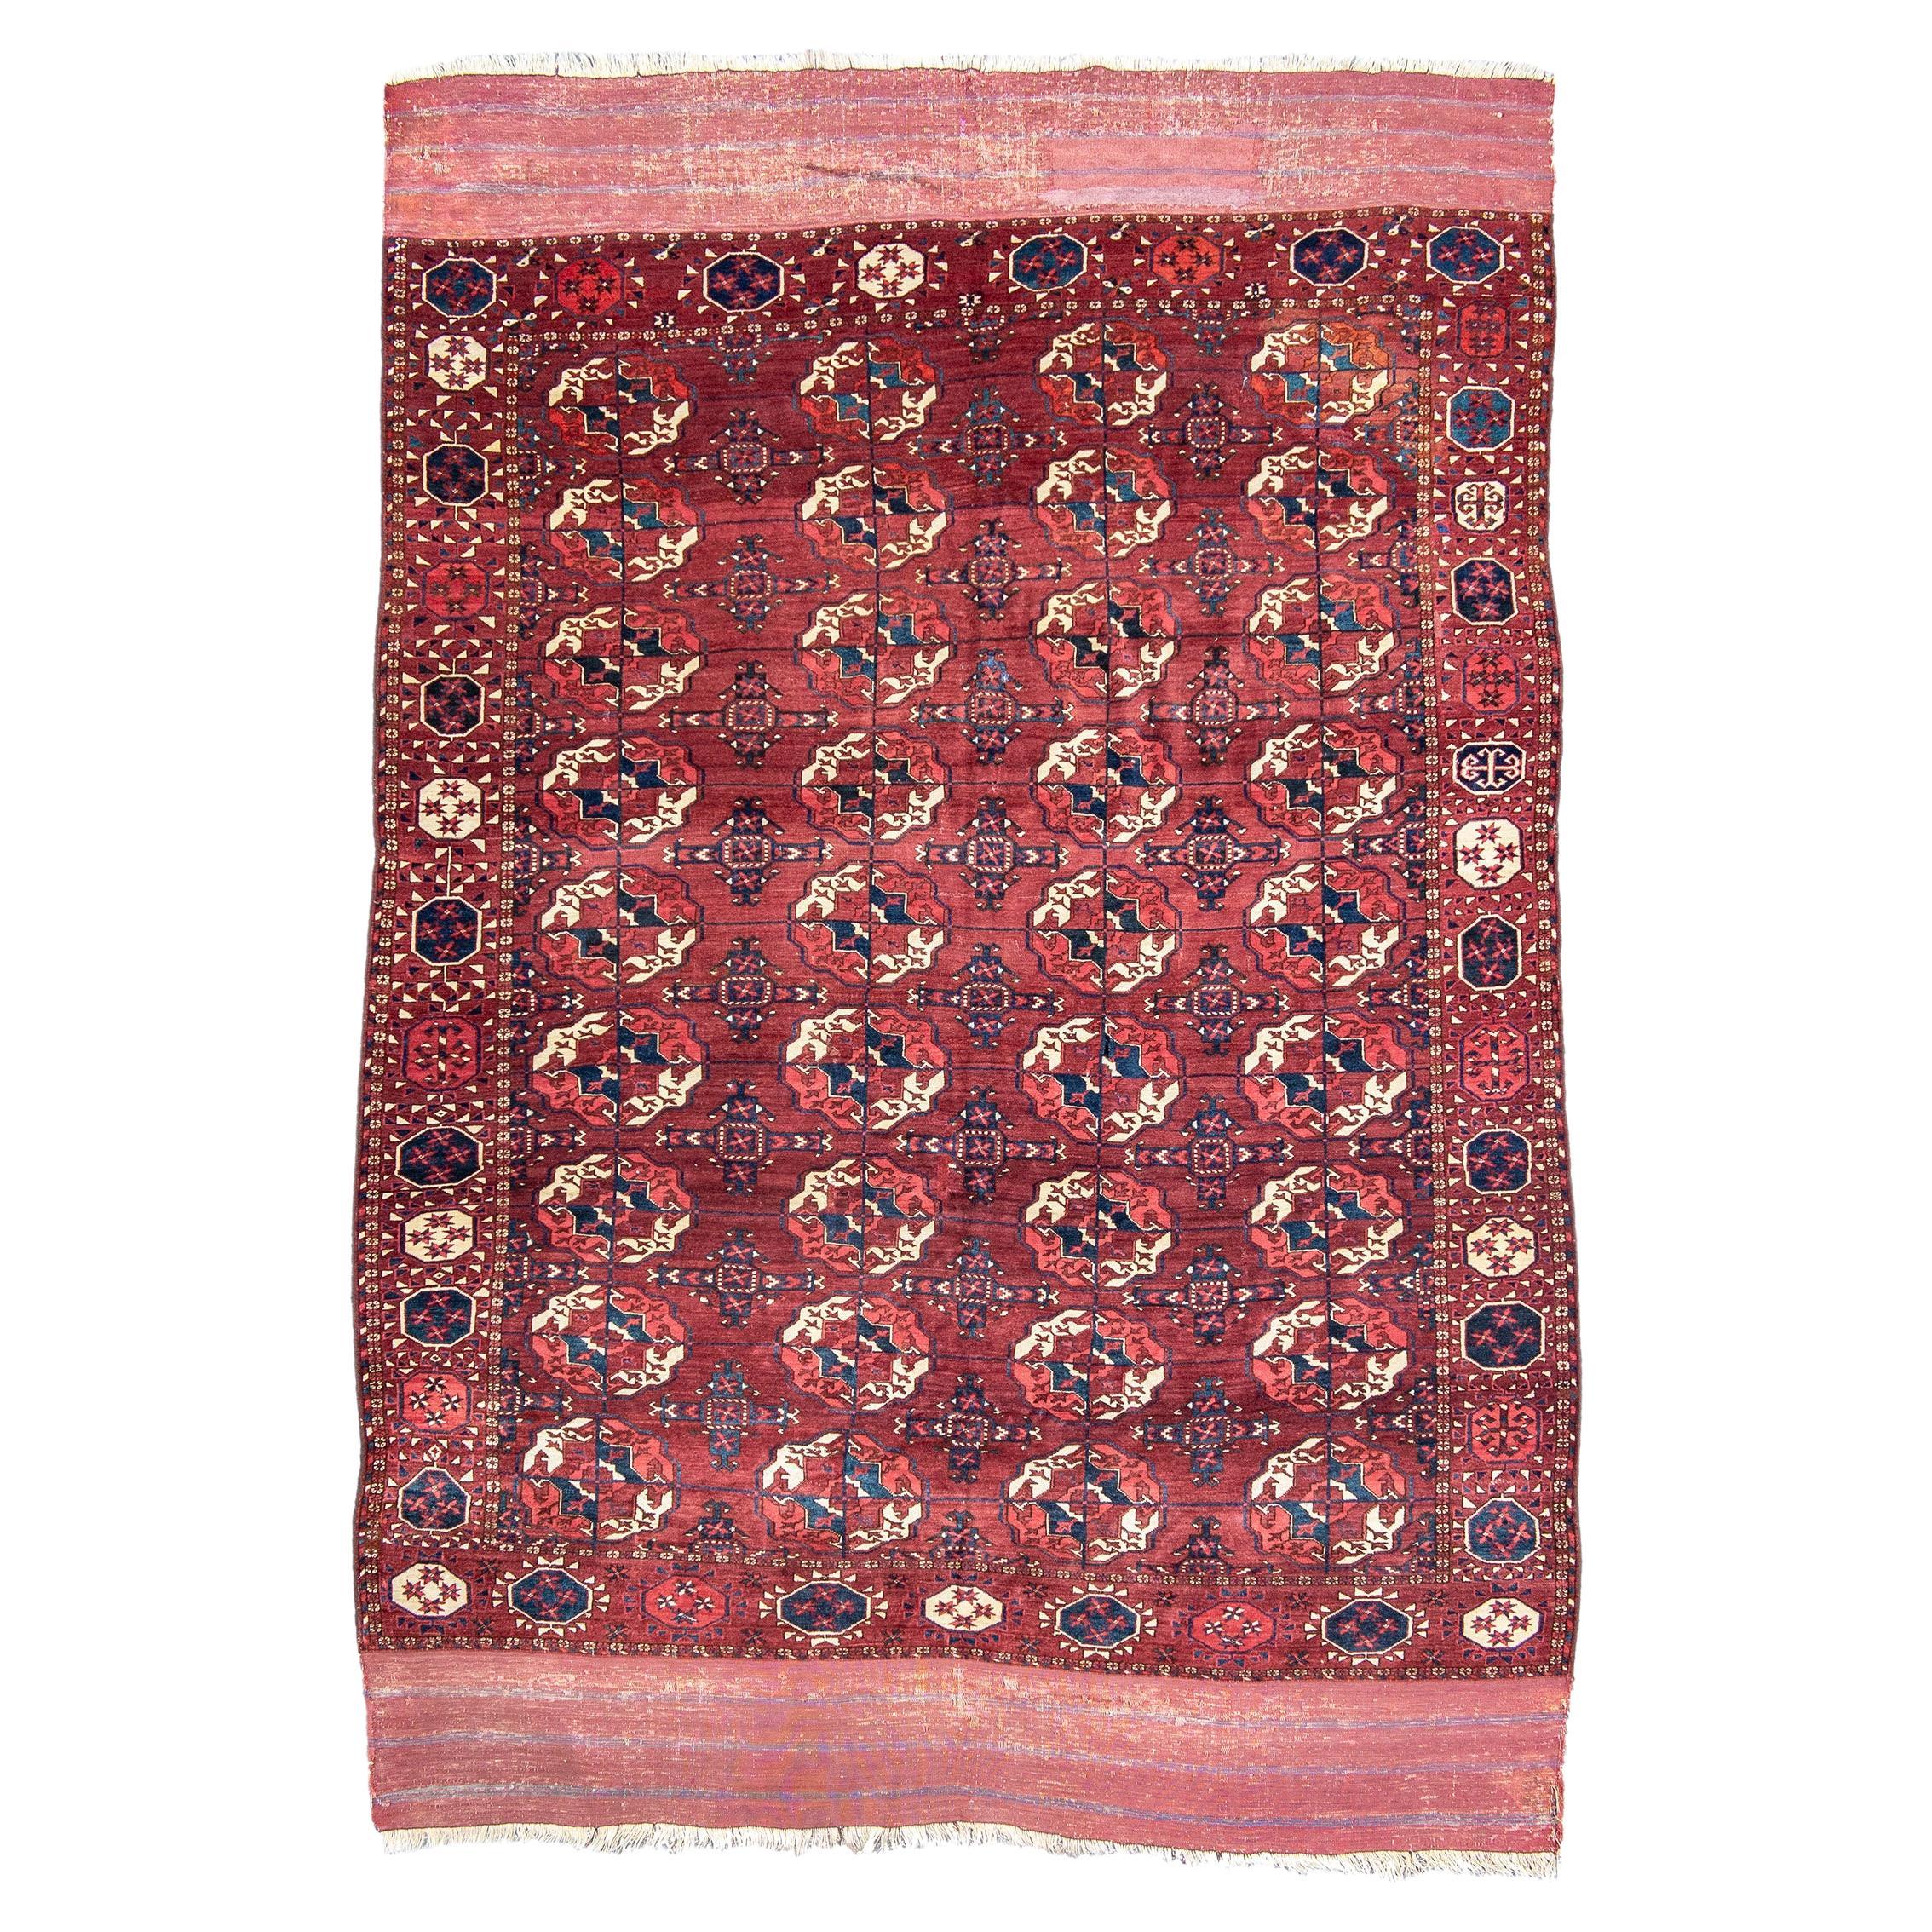 Tekke Main Carpet, 3rd Quarter 19th Century